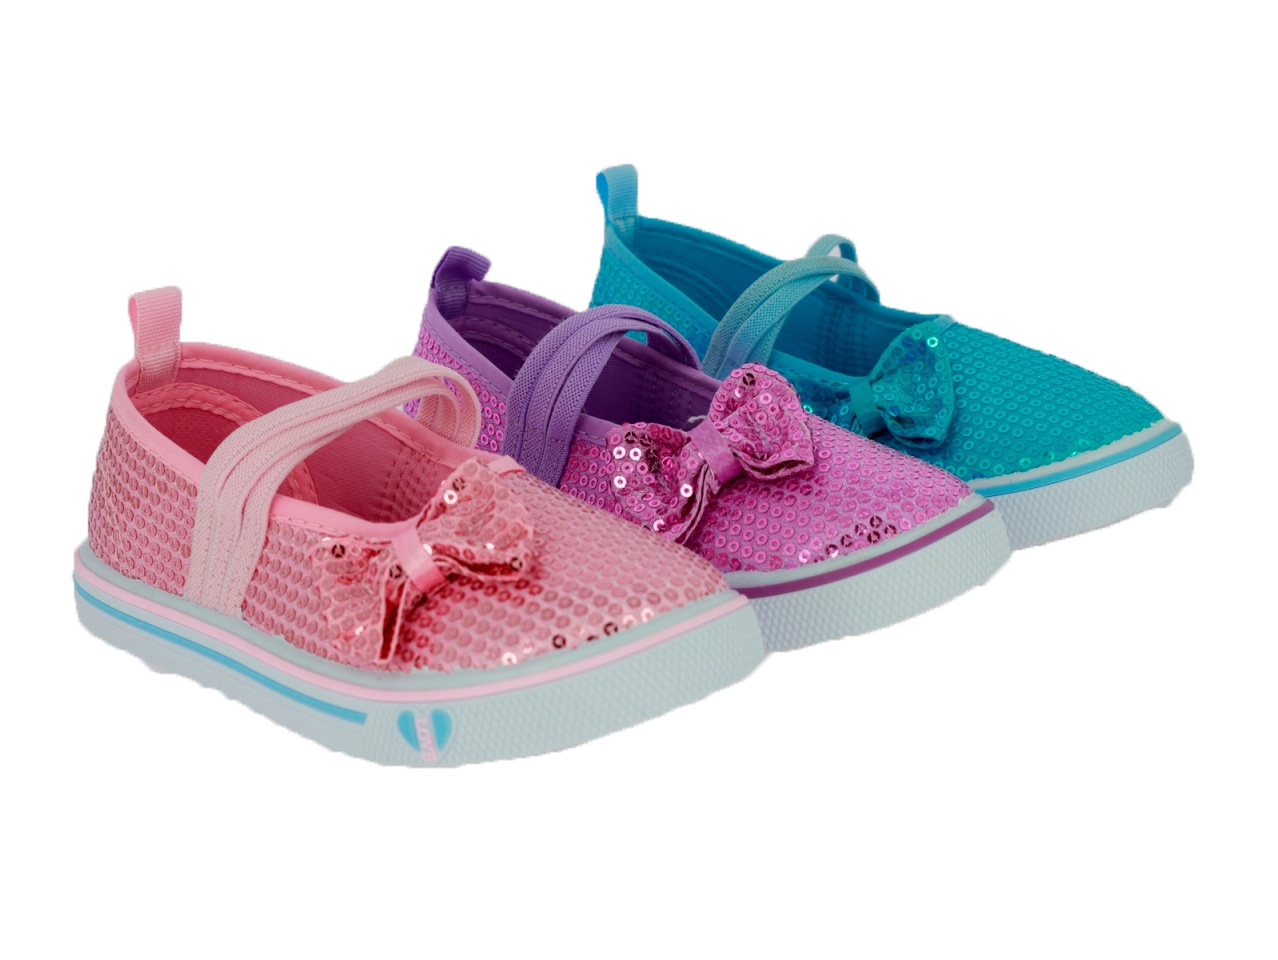 .Ki.-Schuh, PVC-Sohle, mit Schleife+Pailletten, Gummizug mittig, Textil, pink+blau+lila